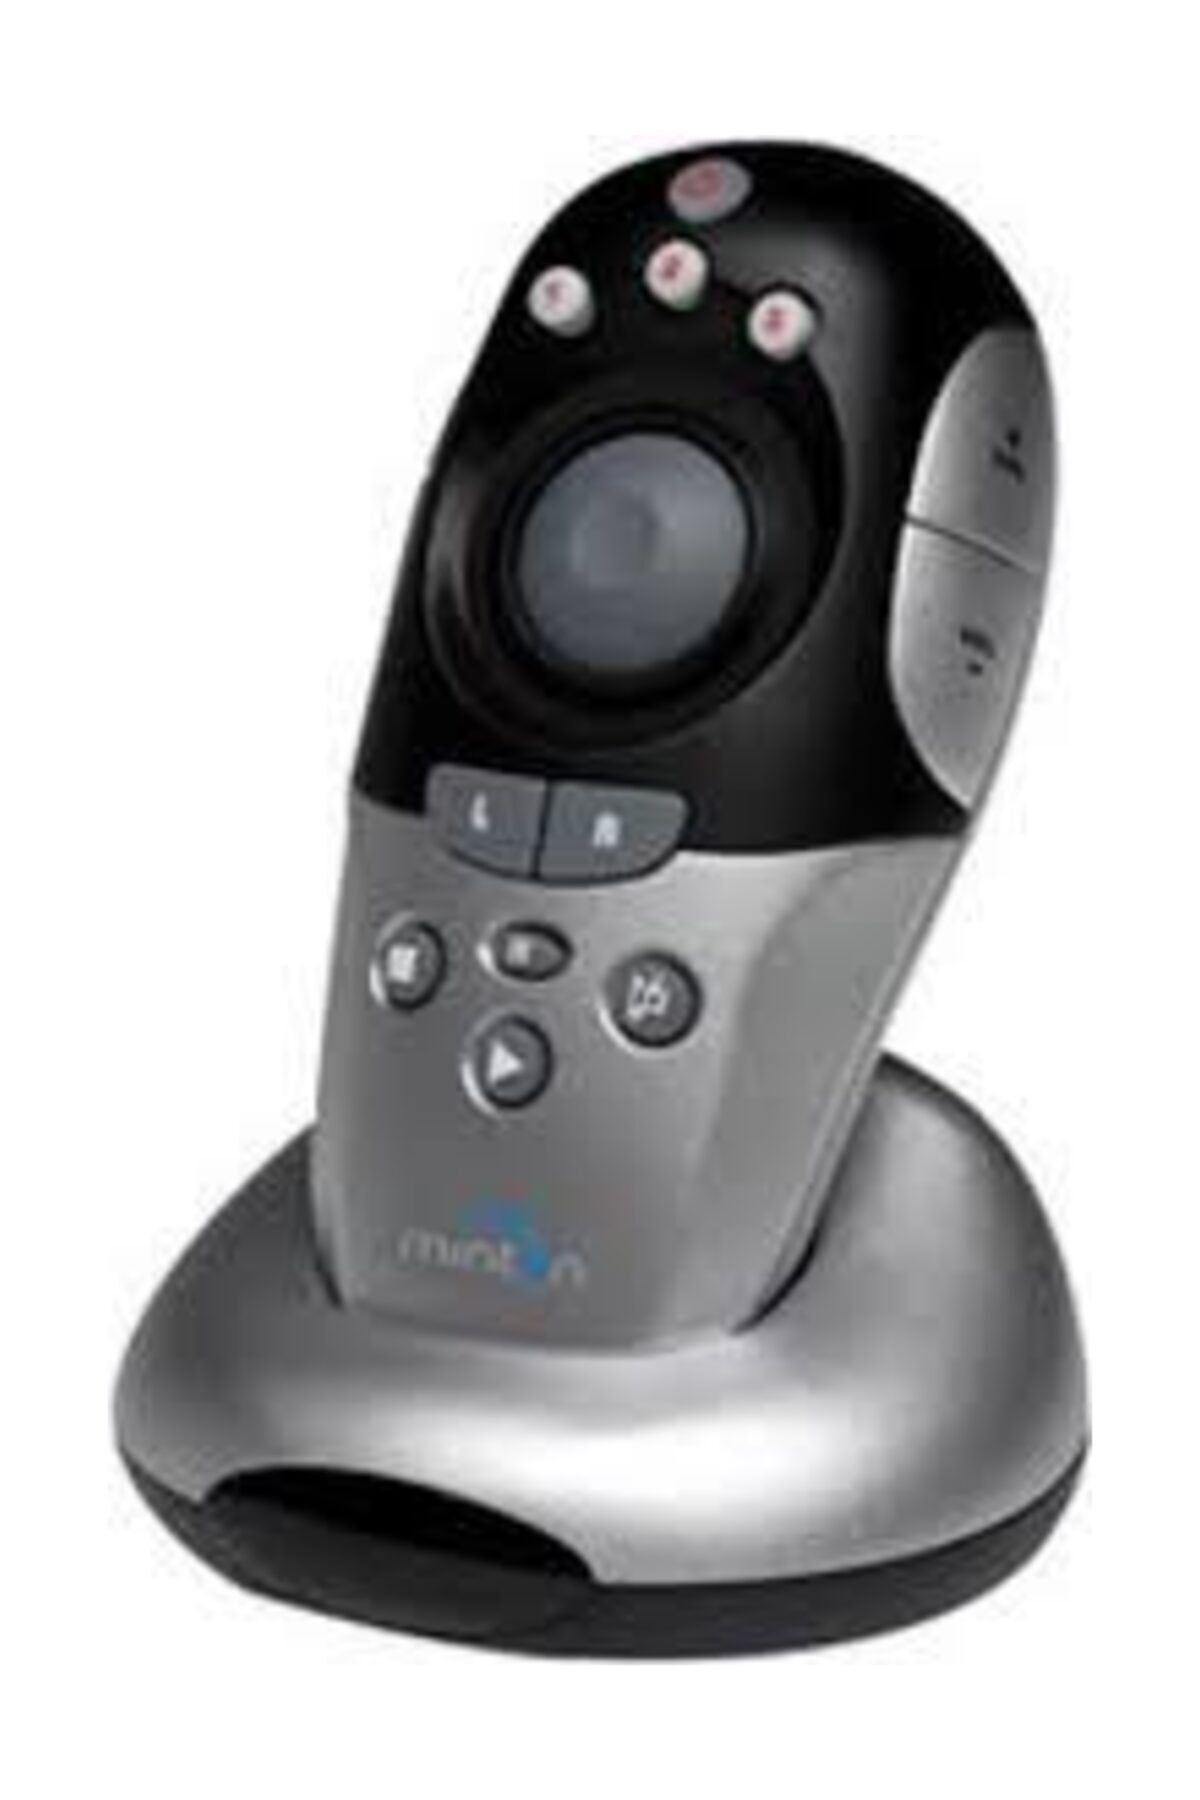 MINTON Mrc-3300 Multimedia Mouse